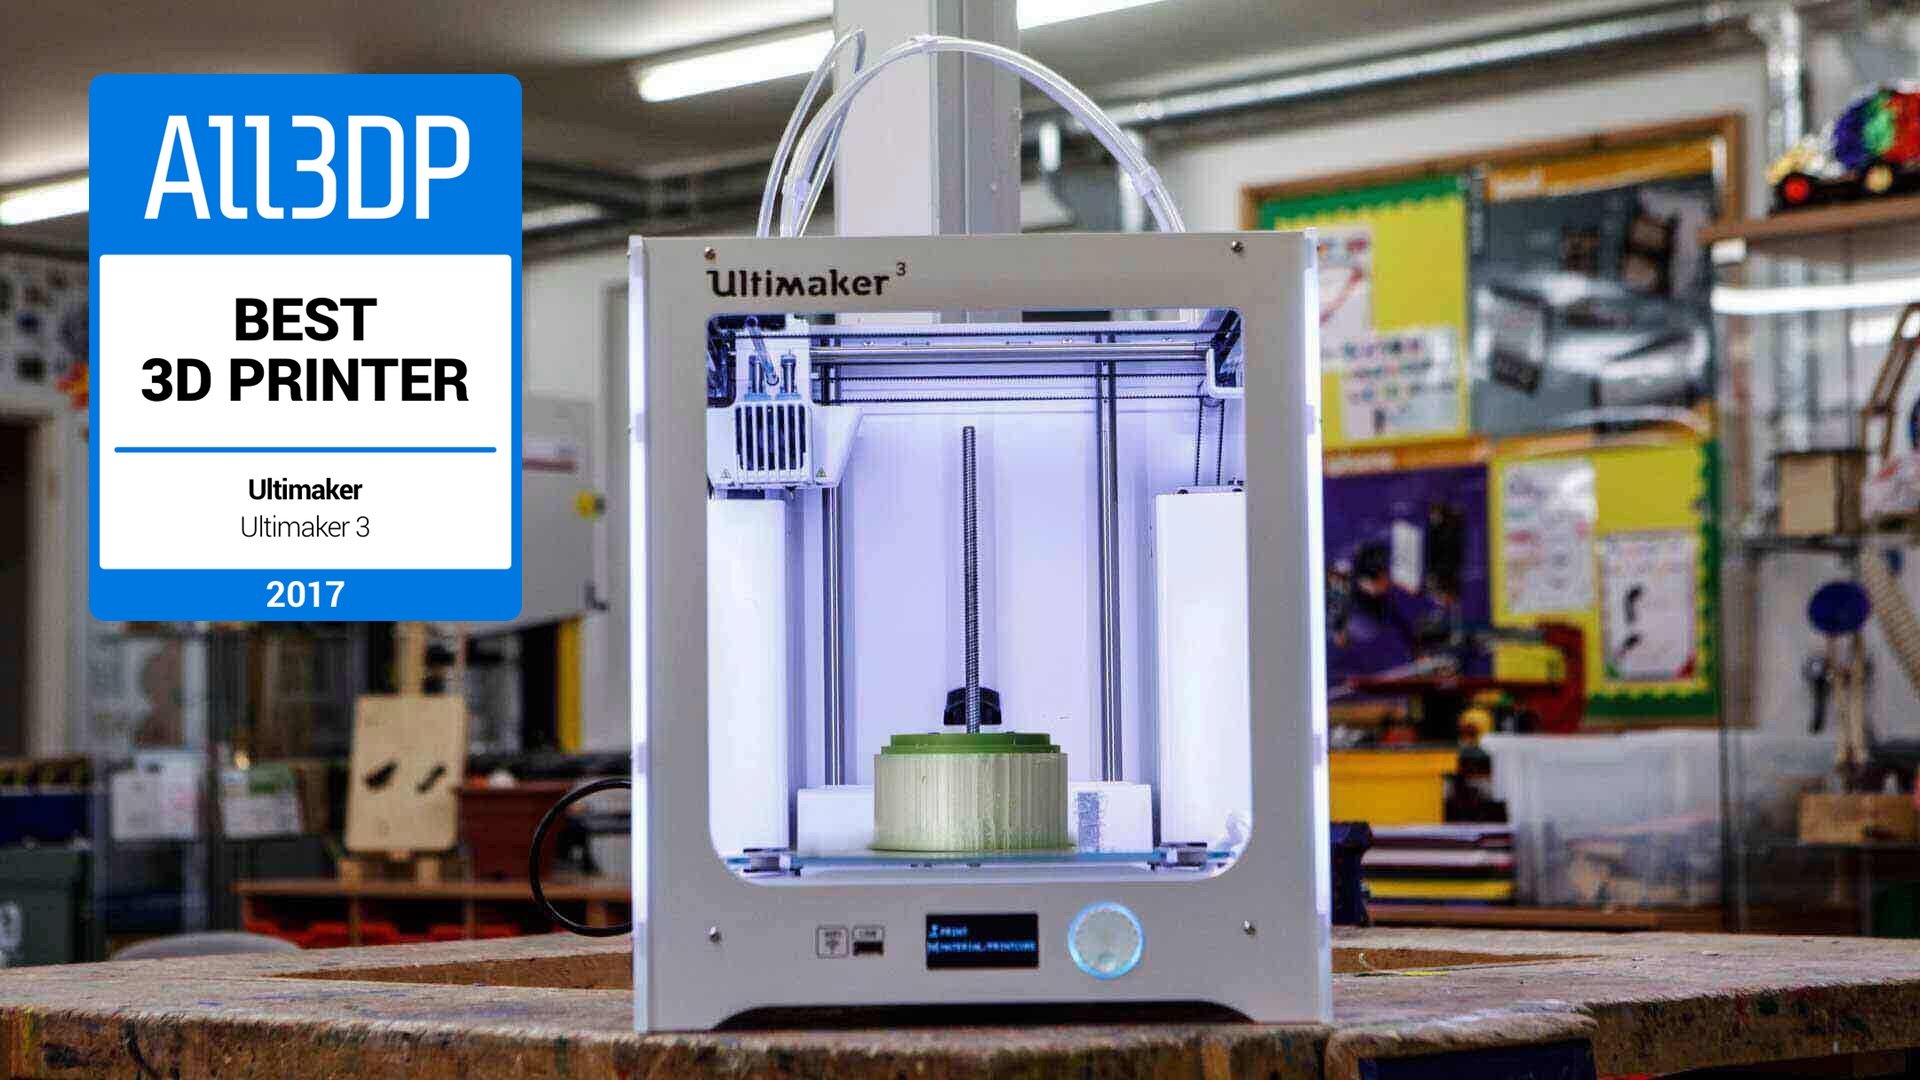 Review: Still a Great 3D Printer All3DP